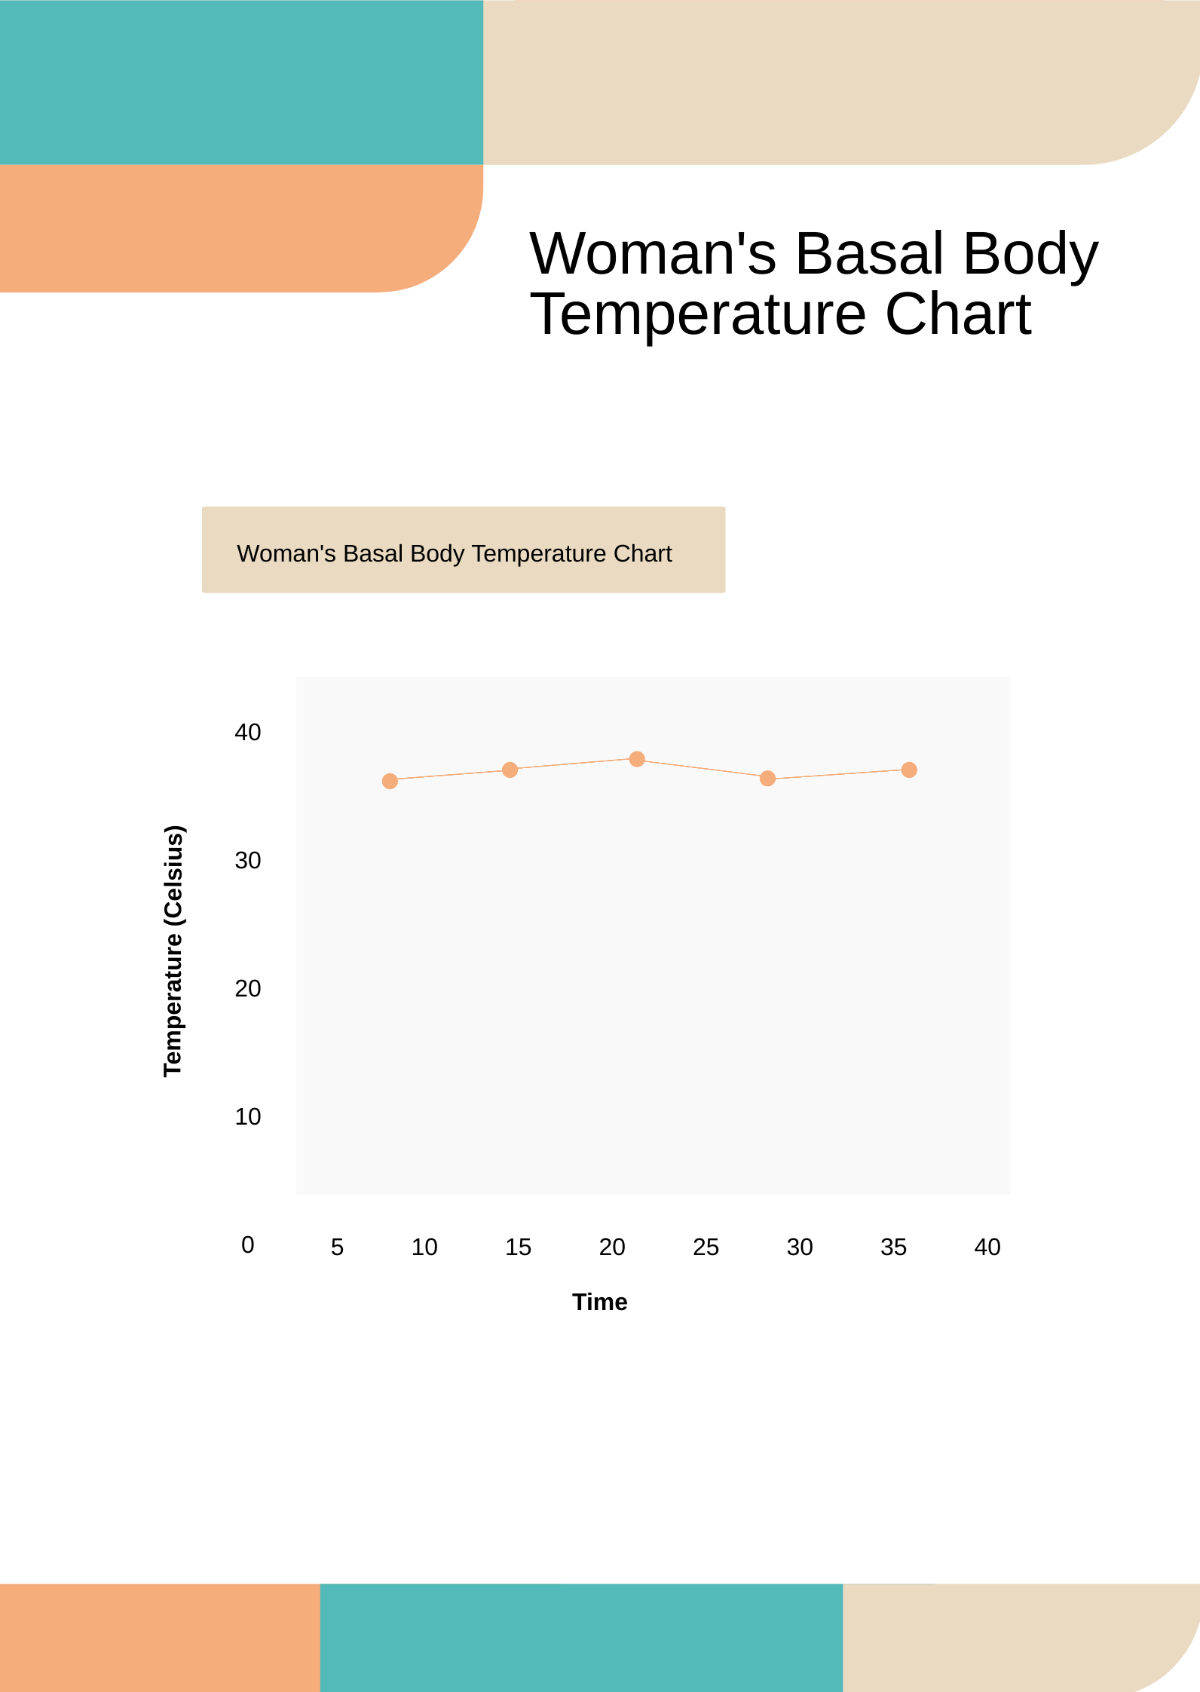 Woman's Basal Body Temperature Chart Template